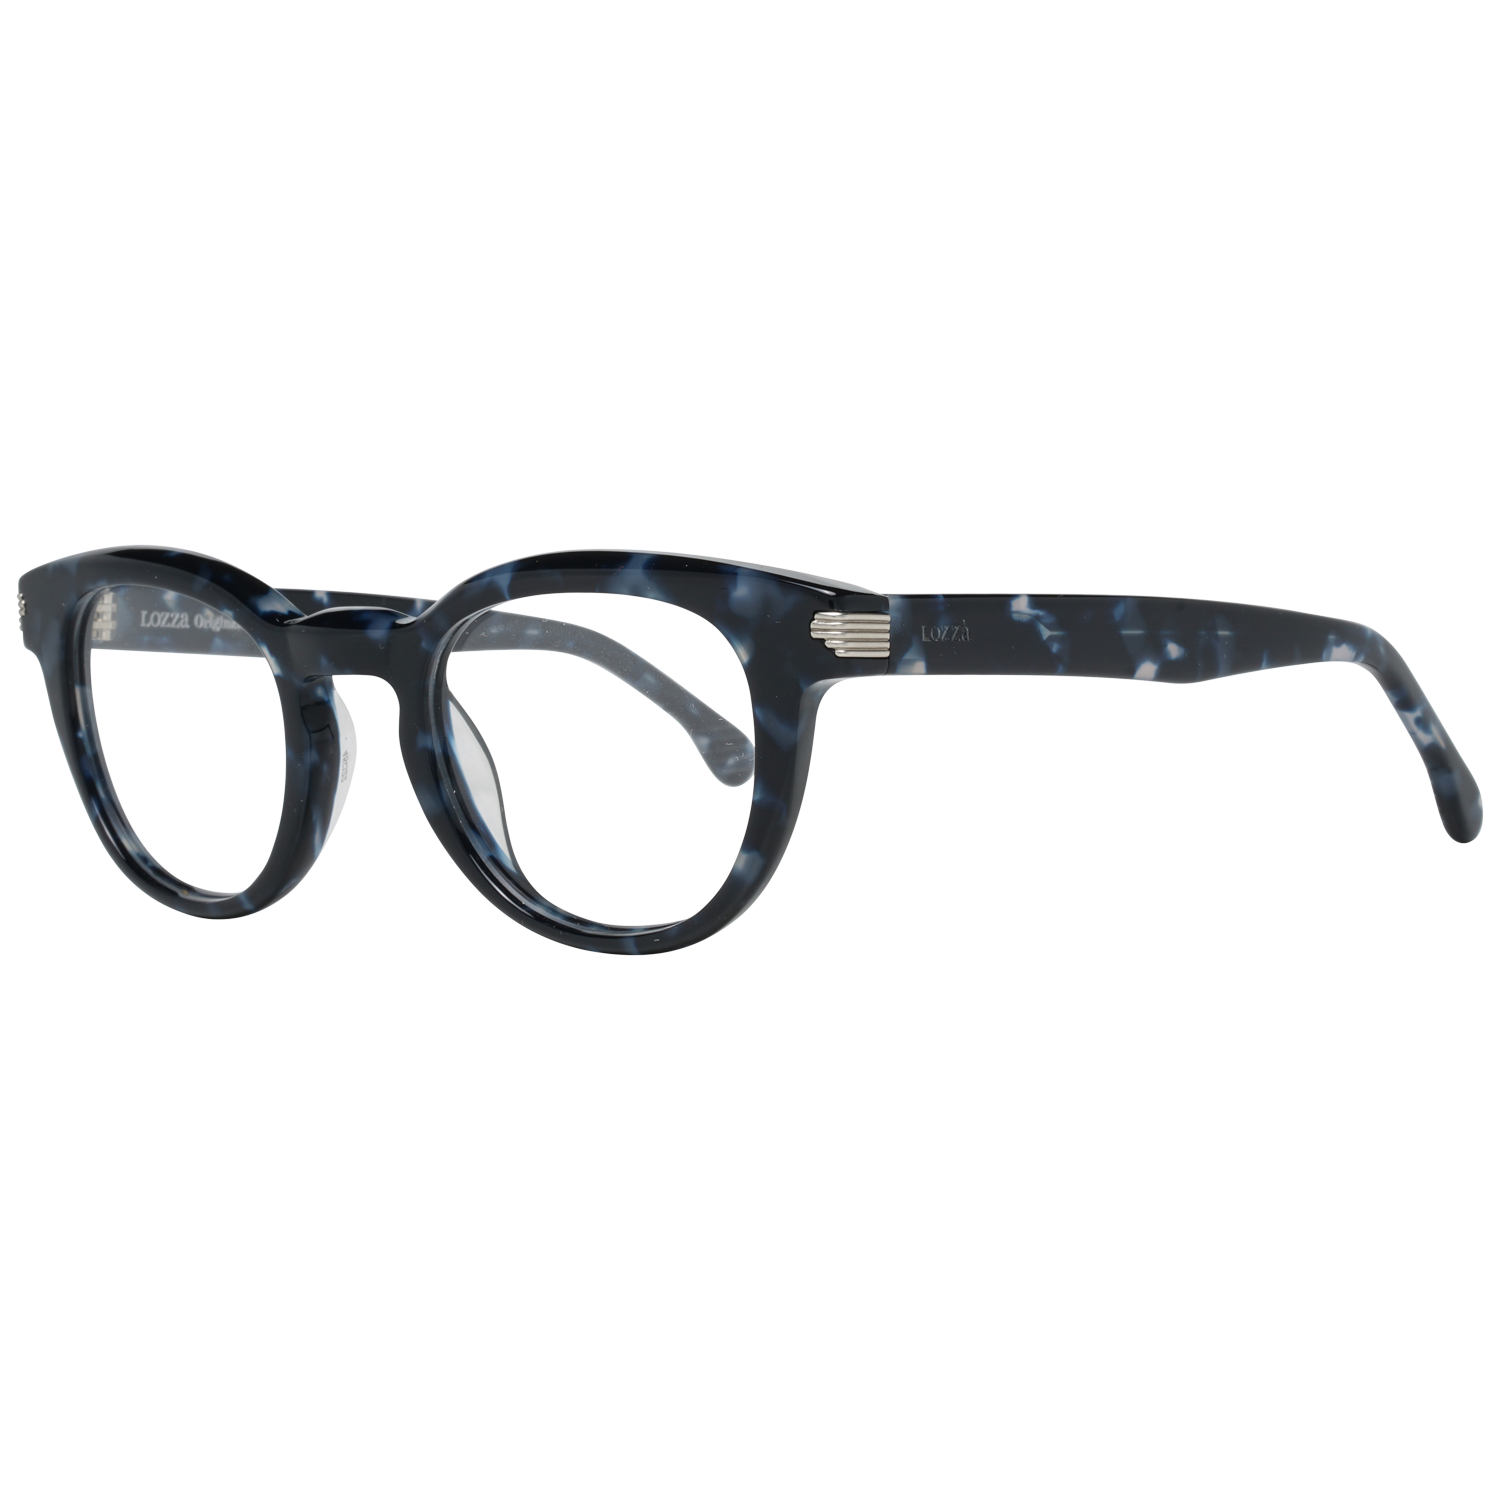 Lozza Frames Lozza Optical Frame VL4123 06DQ 45 Eyeglasses Eyewear UK USA Australia 